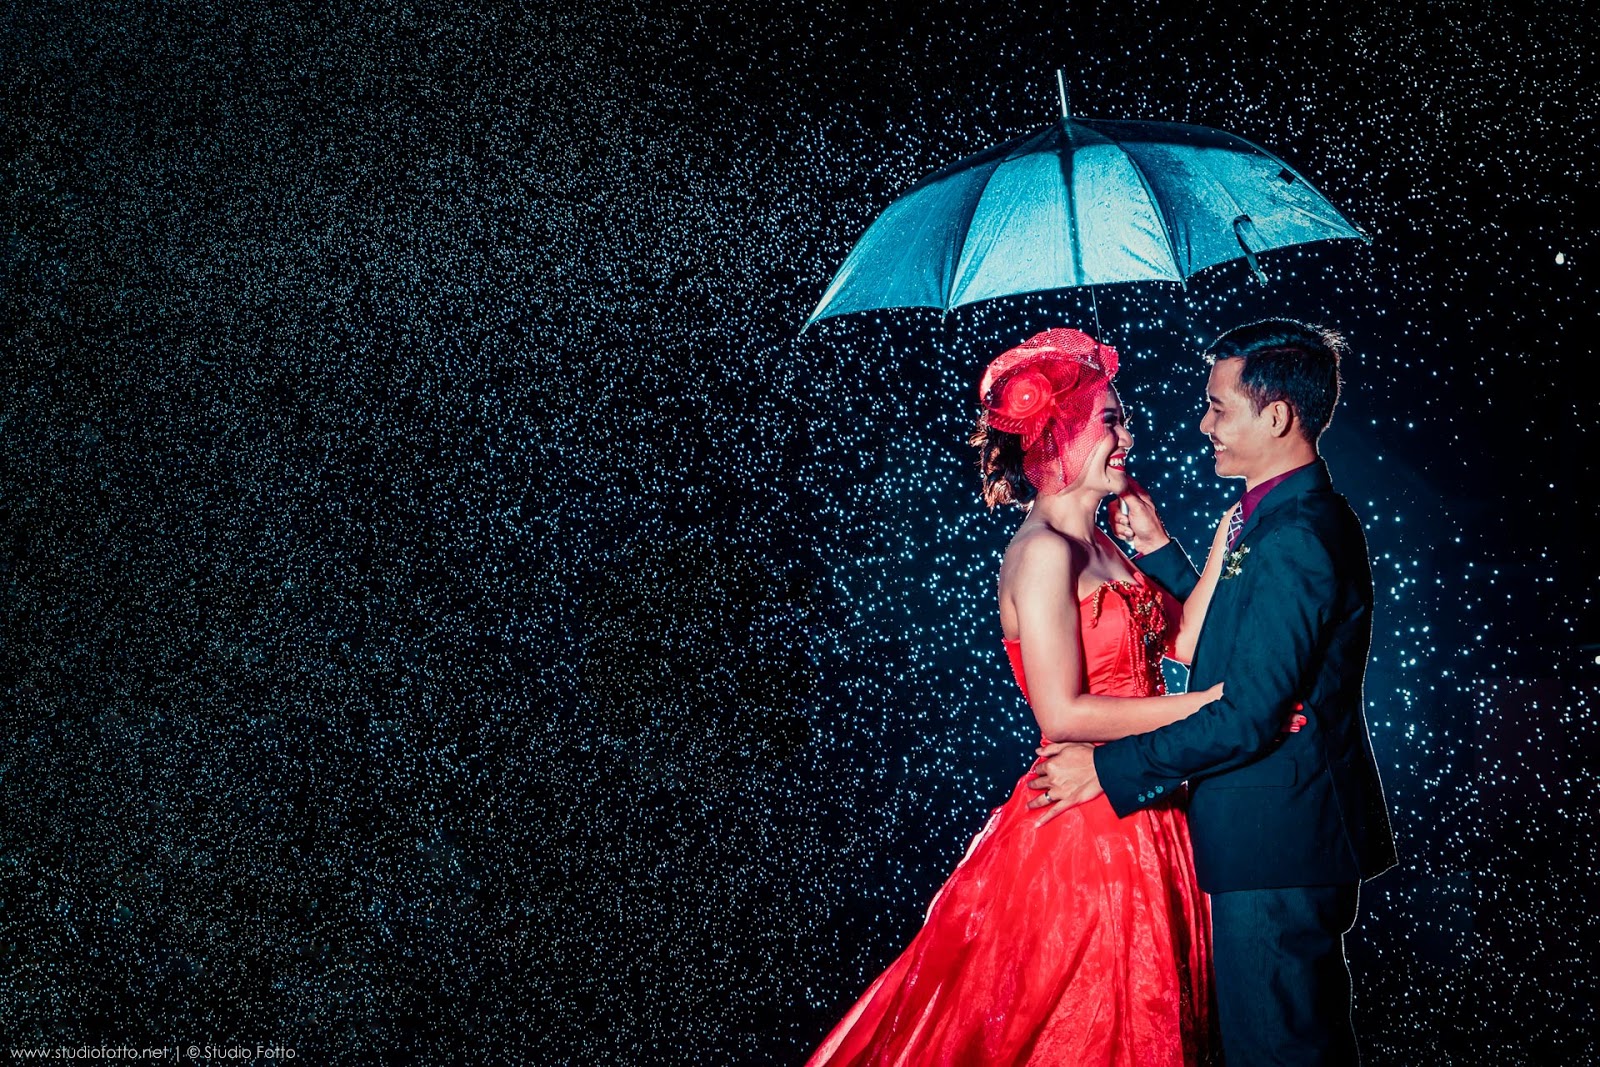 Dancing In The Rain Outdoor Pre Wedding Photos In Lampung Studio